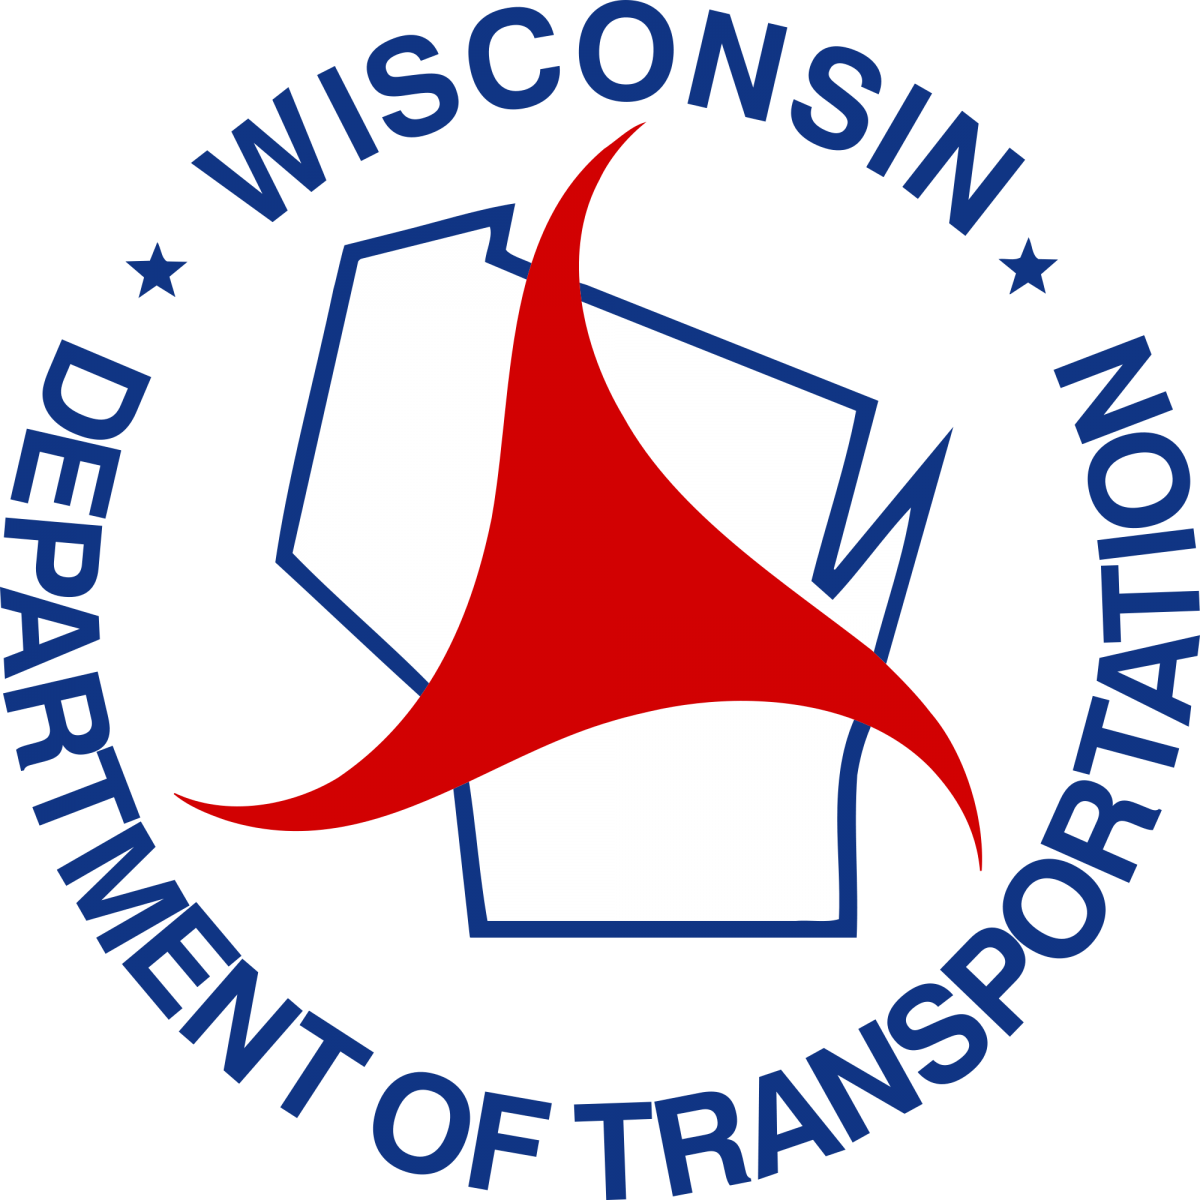 WisDOT seeks public comment on 2020 ADA Transition Plan